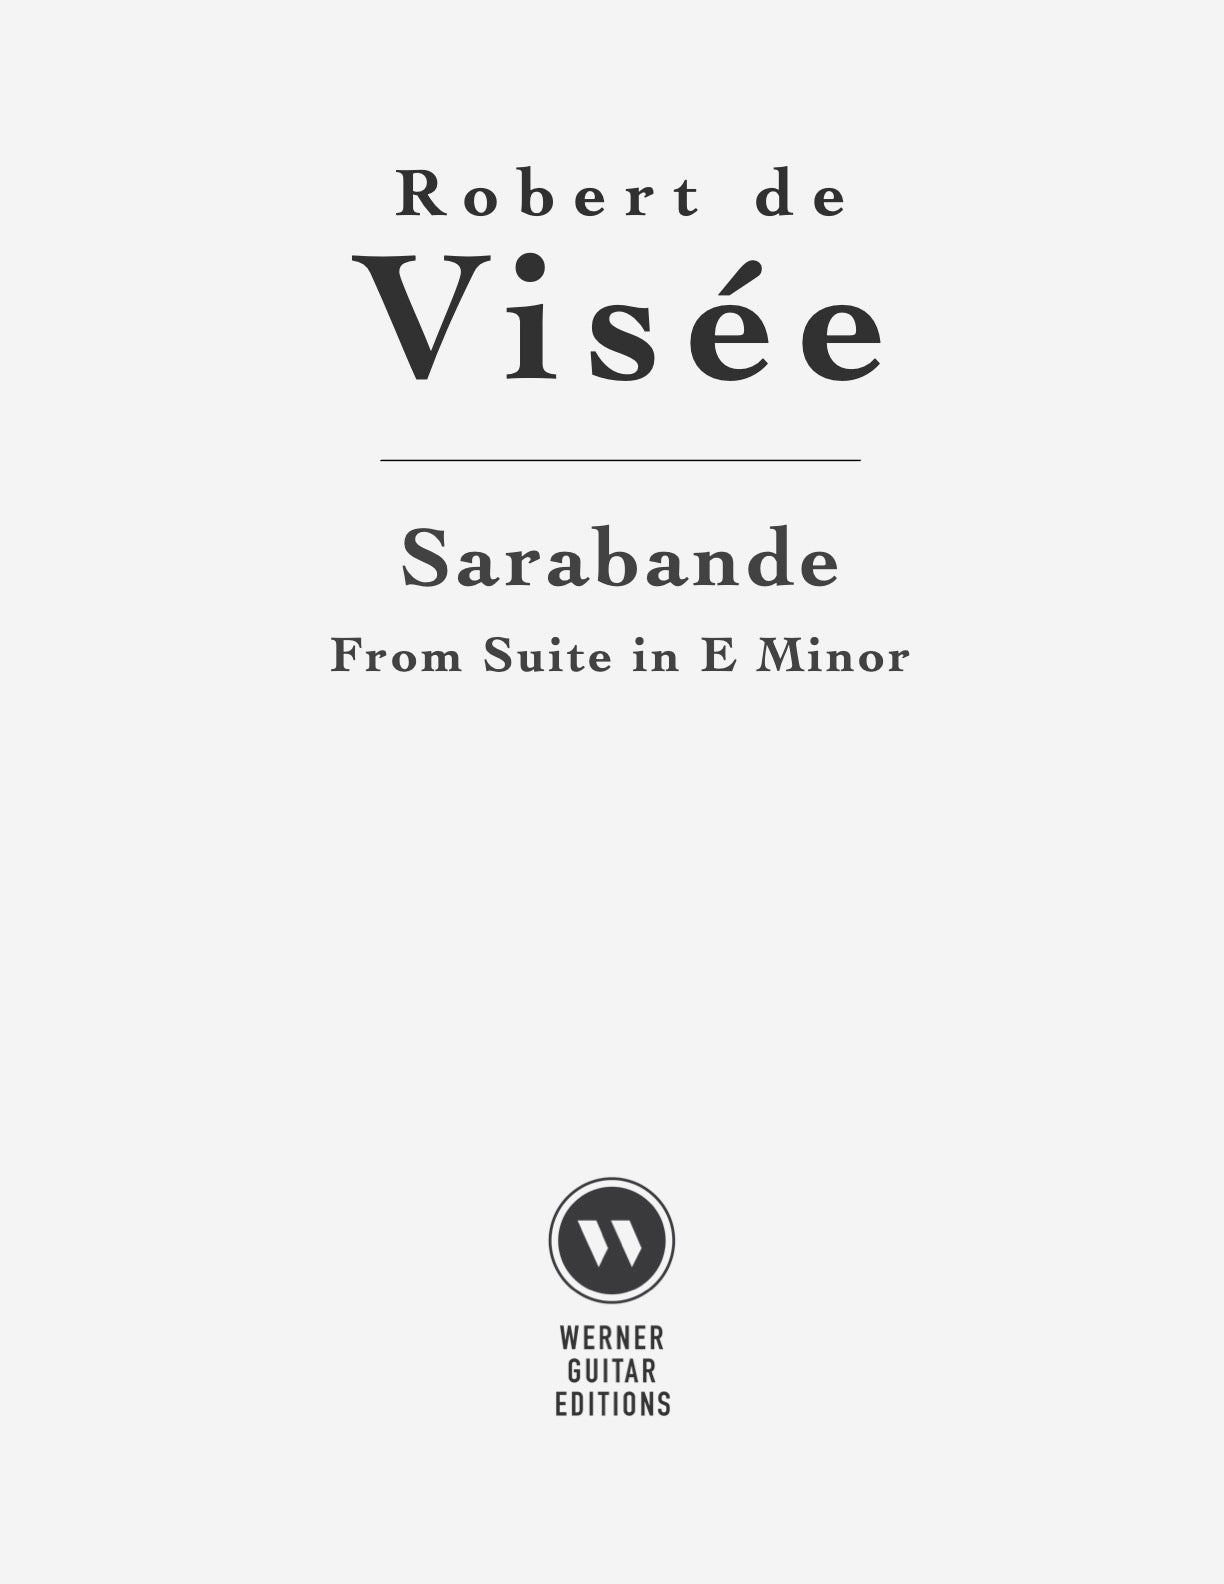 Sarabande in E Minor by Robert de Visée - Sheet Music and Tab